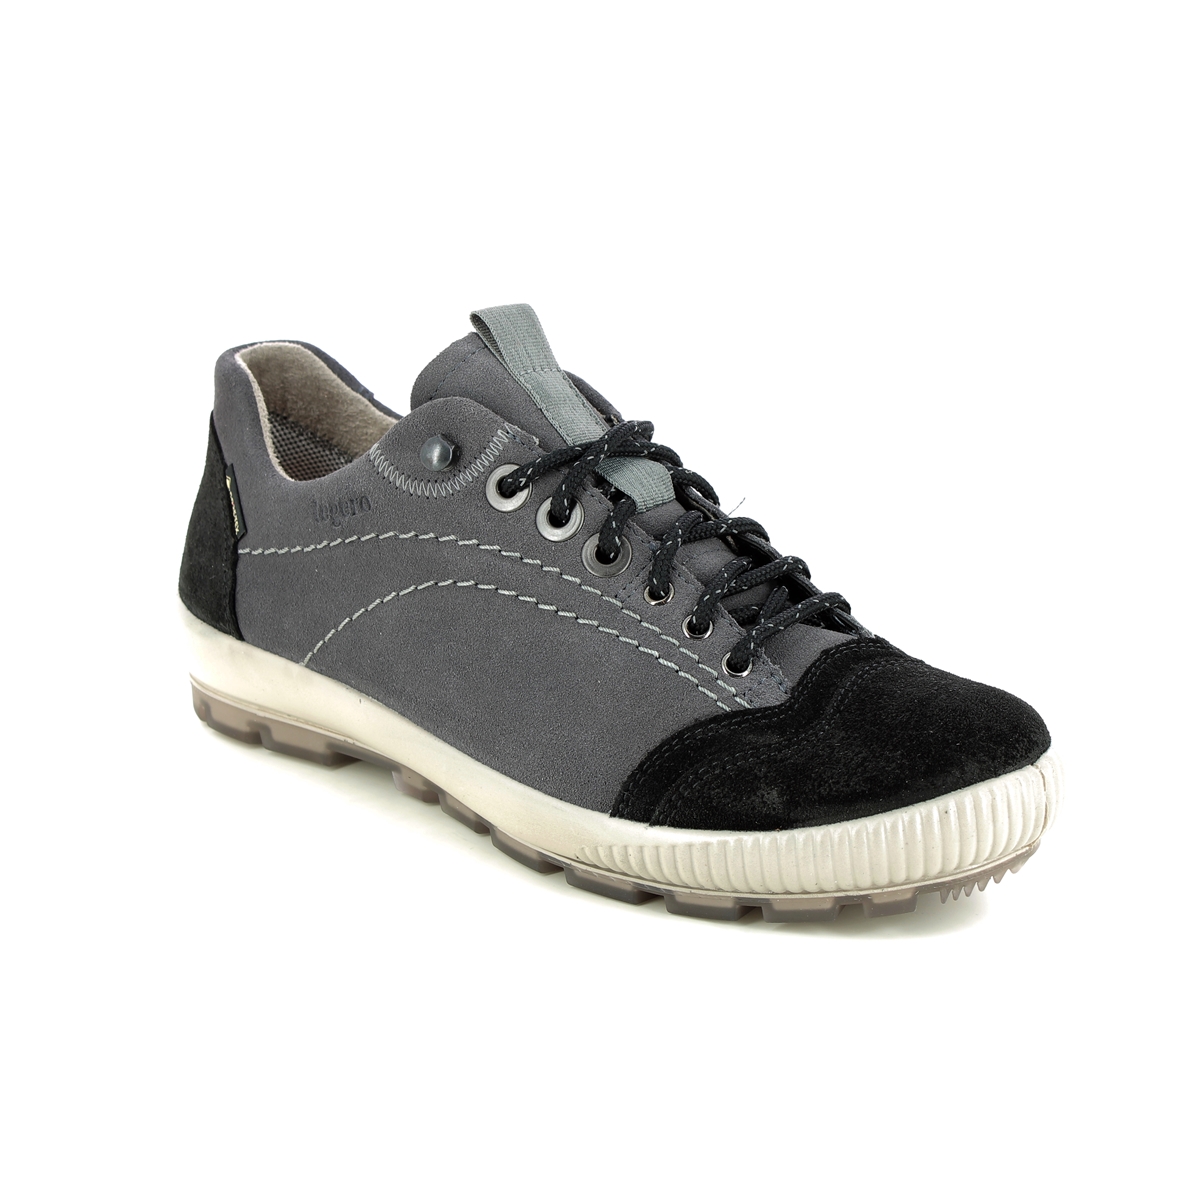 Legero Tanaro Trek Gtx Grey Womens Walking Shoes 2000122-2400 In Size 5.5 In Plain Grey